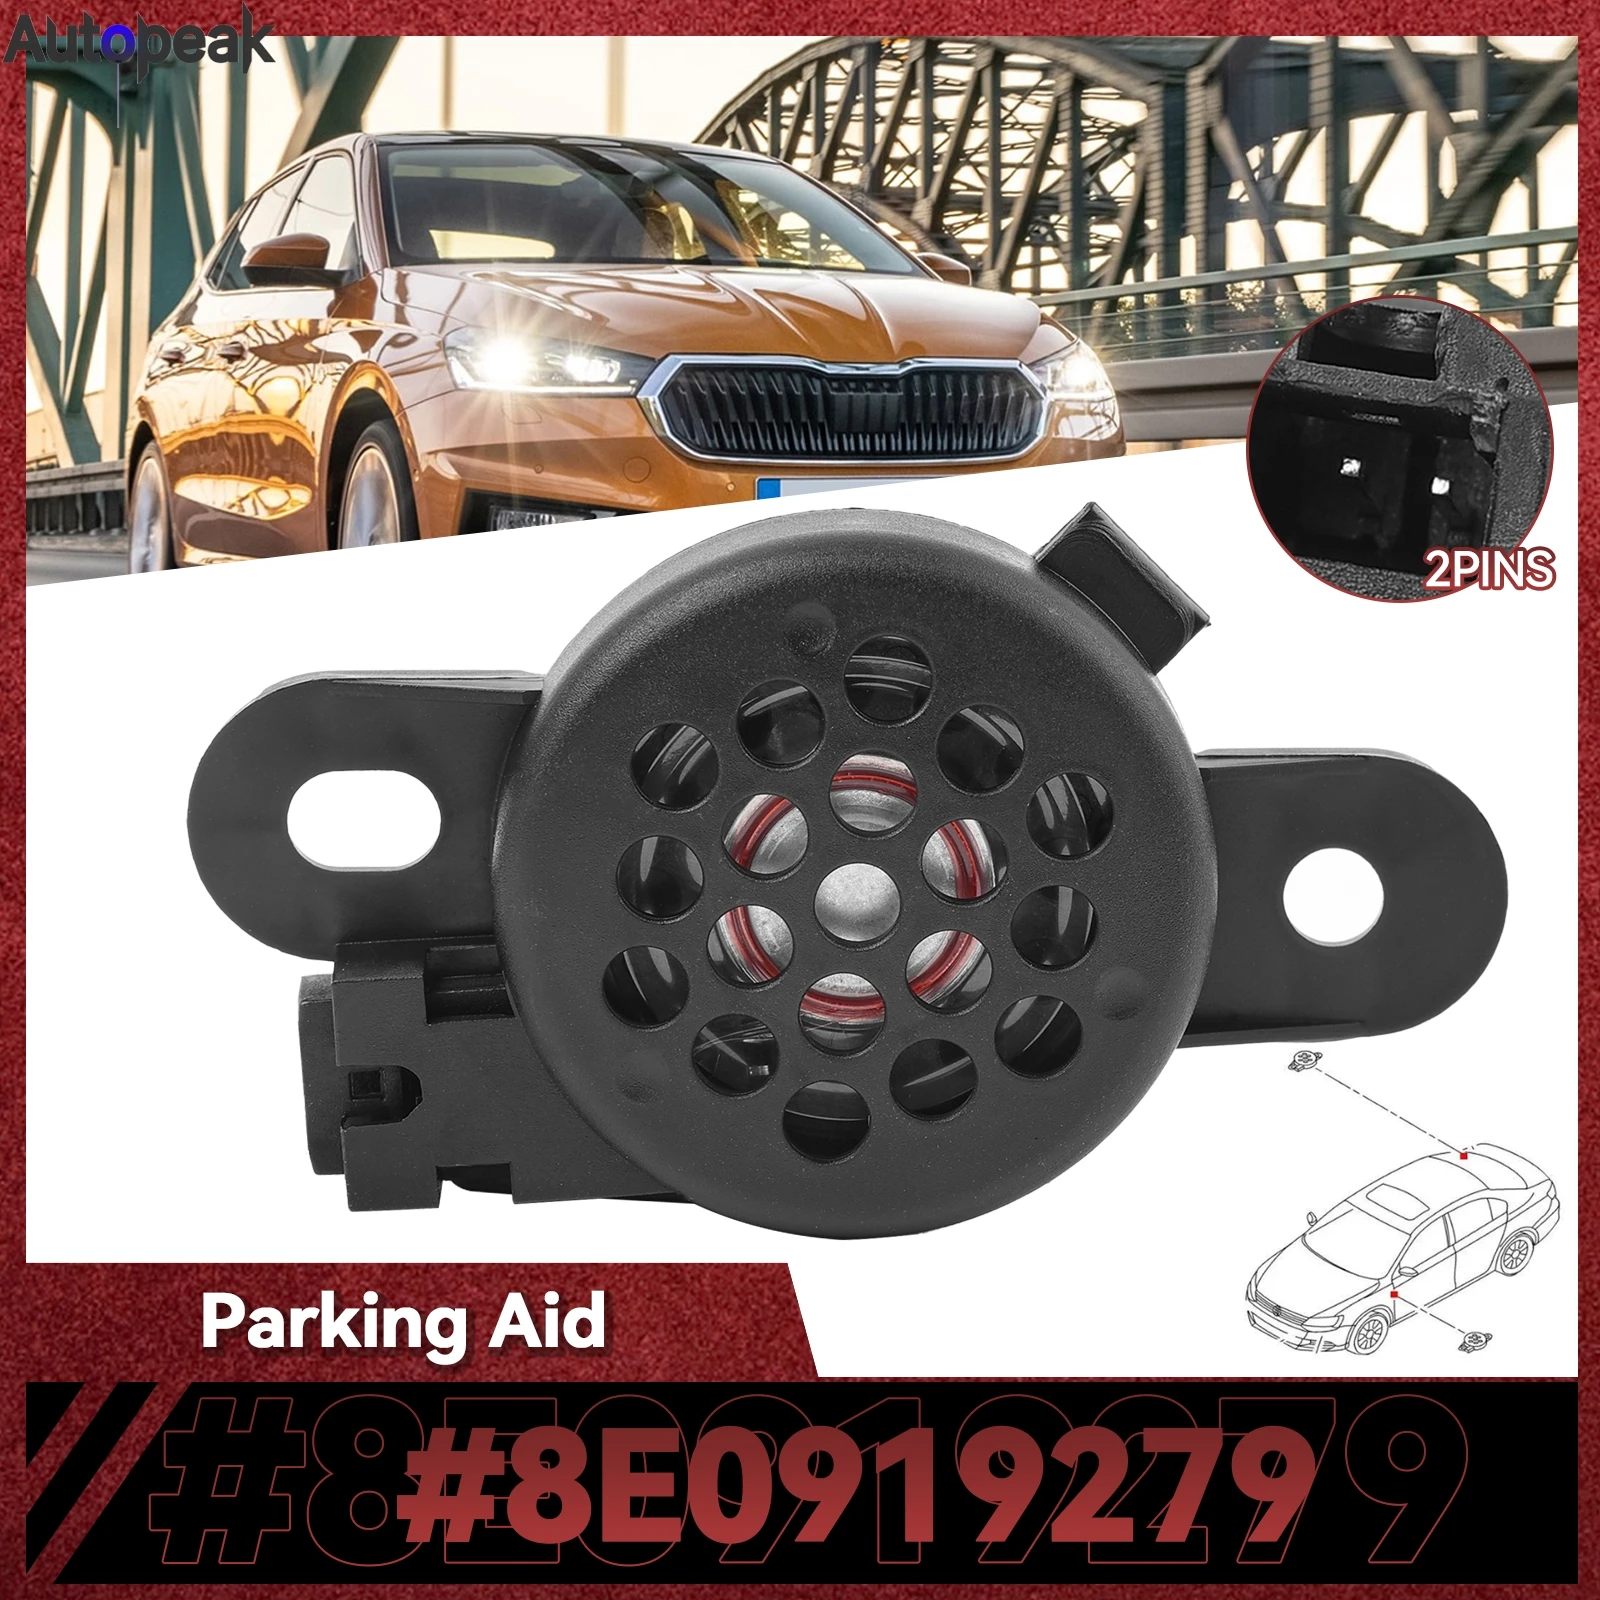 

Speaker Parking Aid Reversing Radar Warning Buzzer Alarm For VW Jetta Golf Passat Audi A3 A4 A6 TT Q3 Q7 Q5 4B0919279 8E0919279